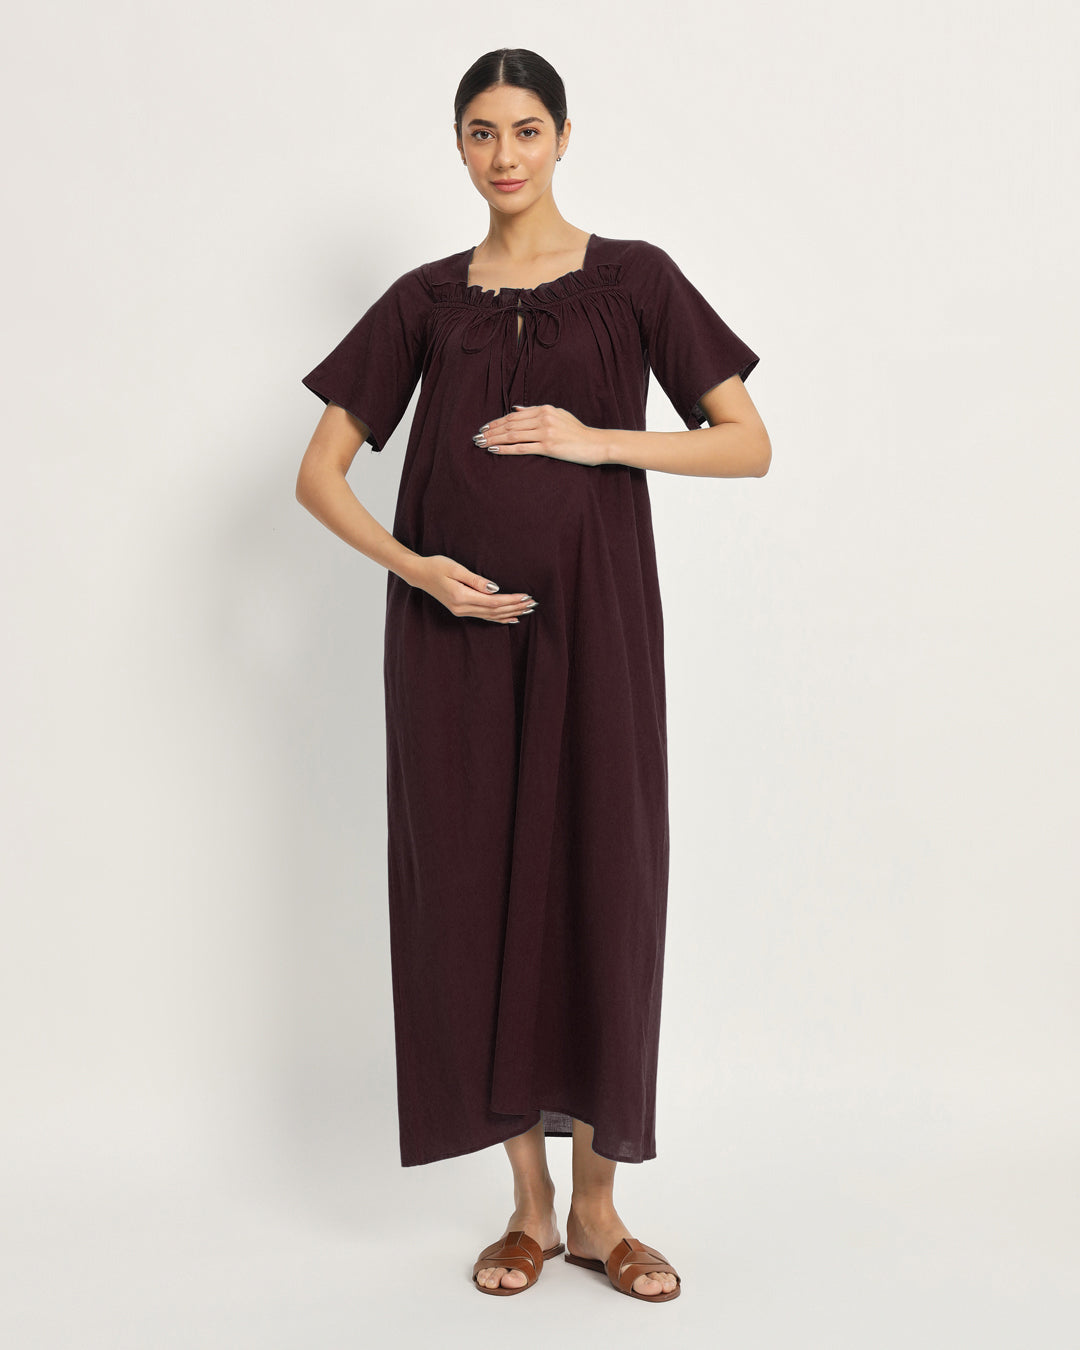 Plum Passion Mama's Glow Maternity & Nursing Dress